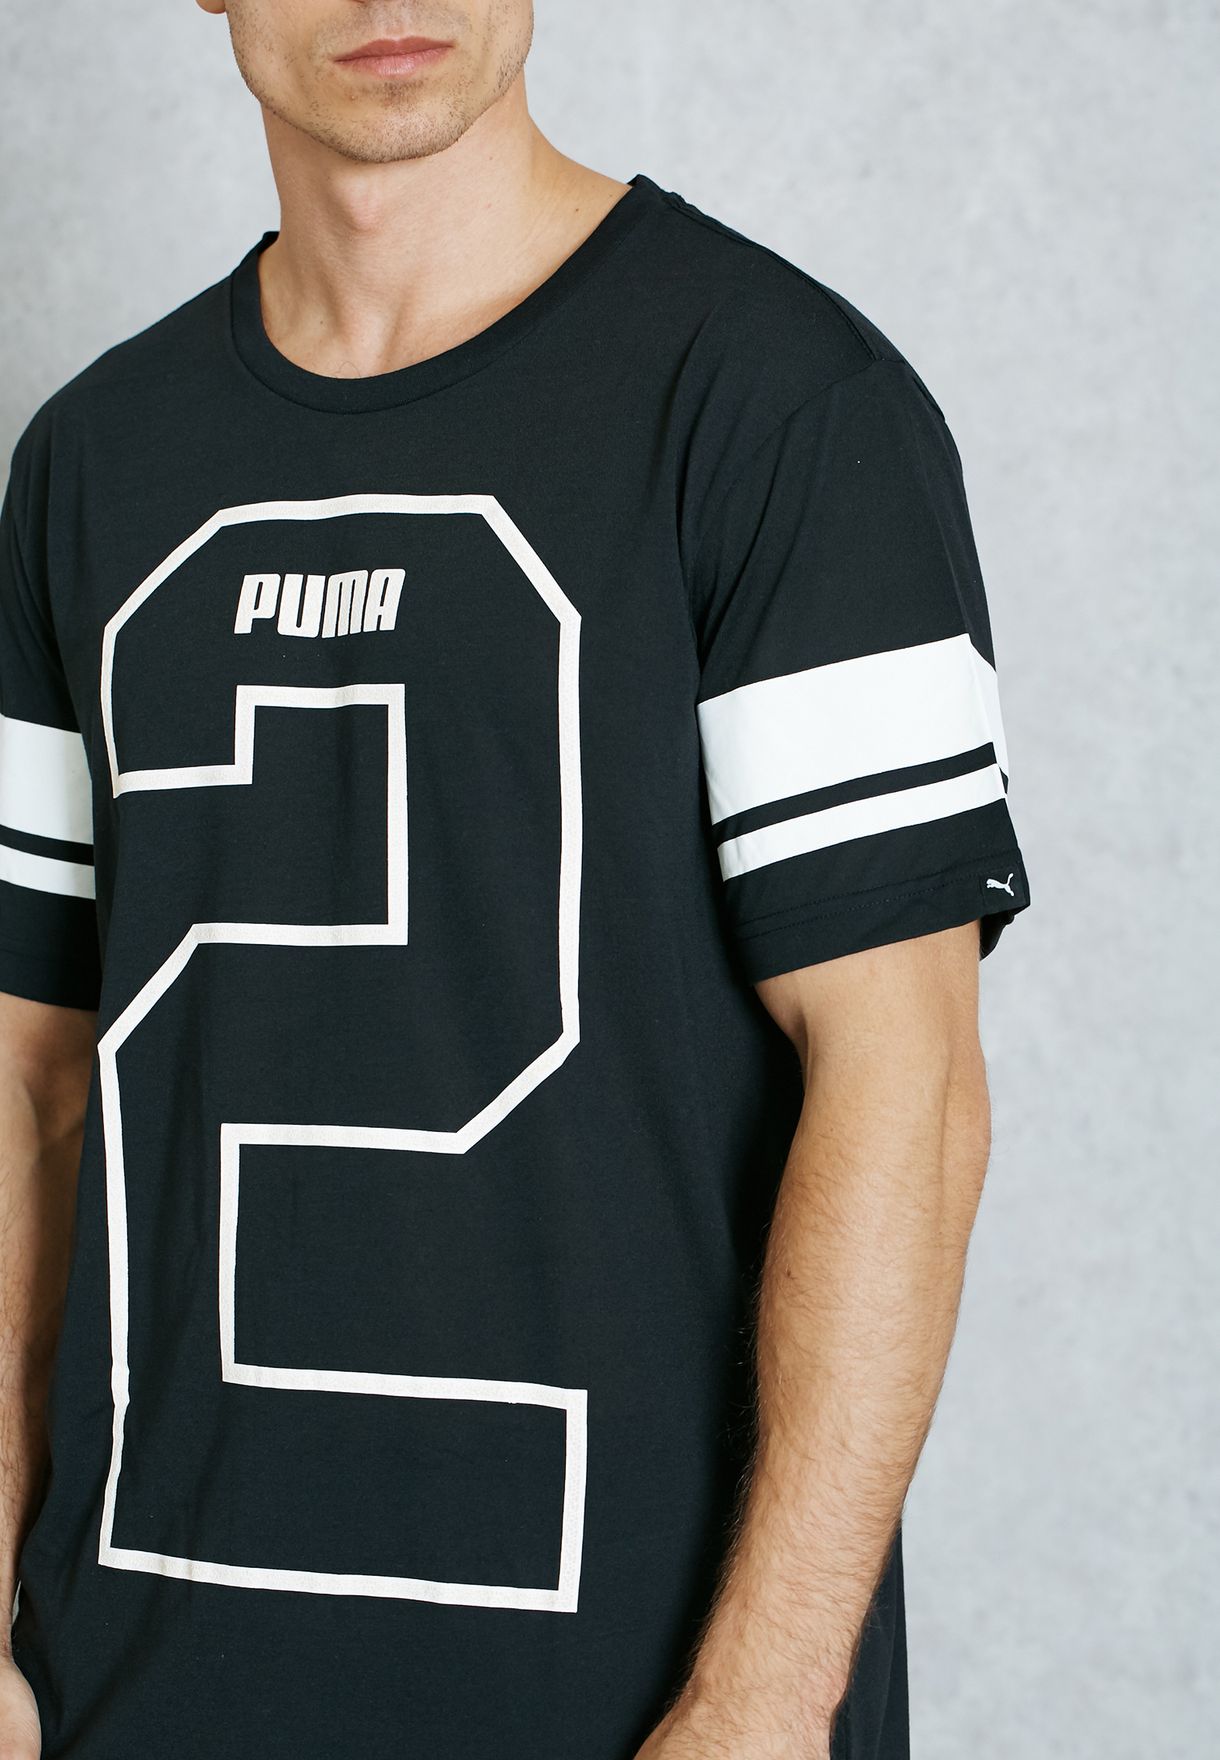 puma shirt numbers